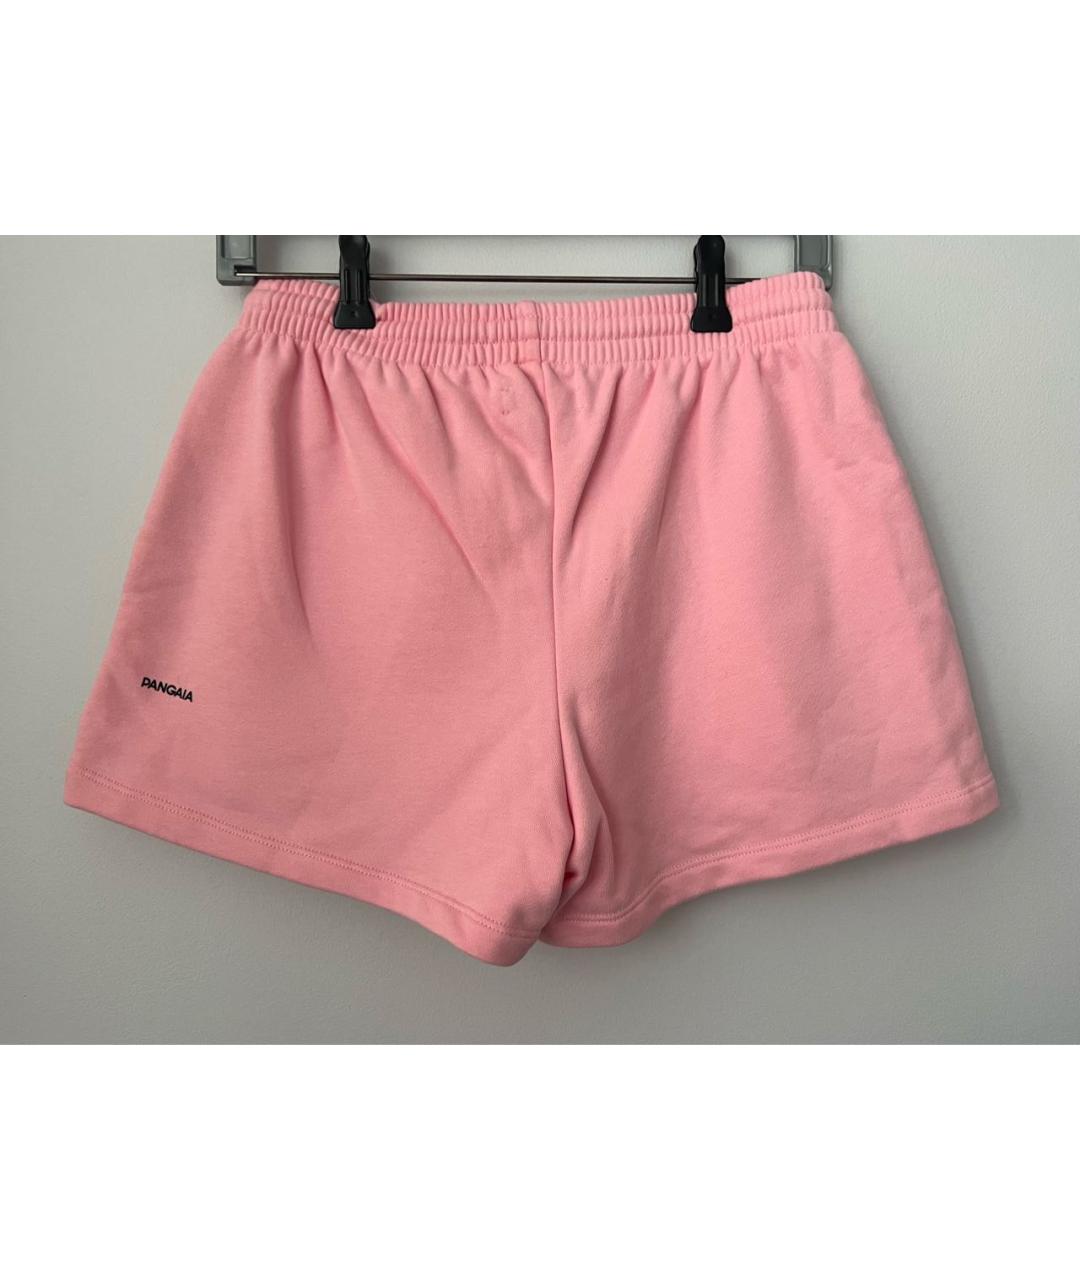 THE PANGAIA Розовые хлопковые шорты, фото 3